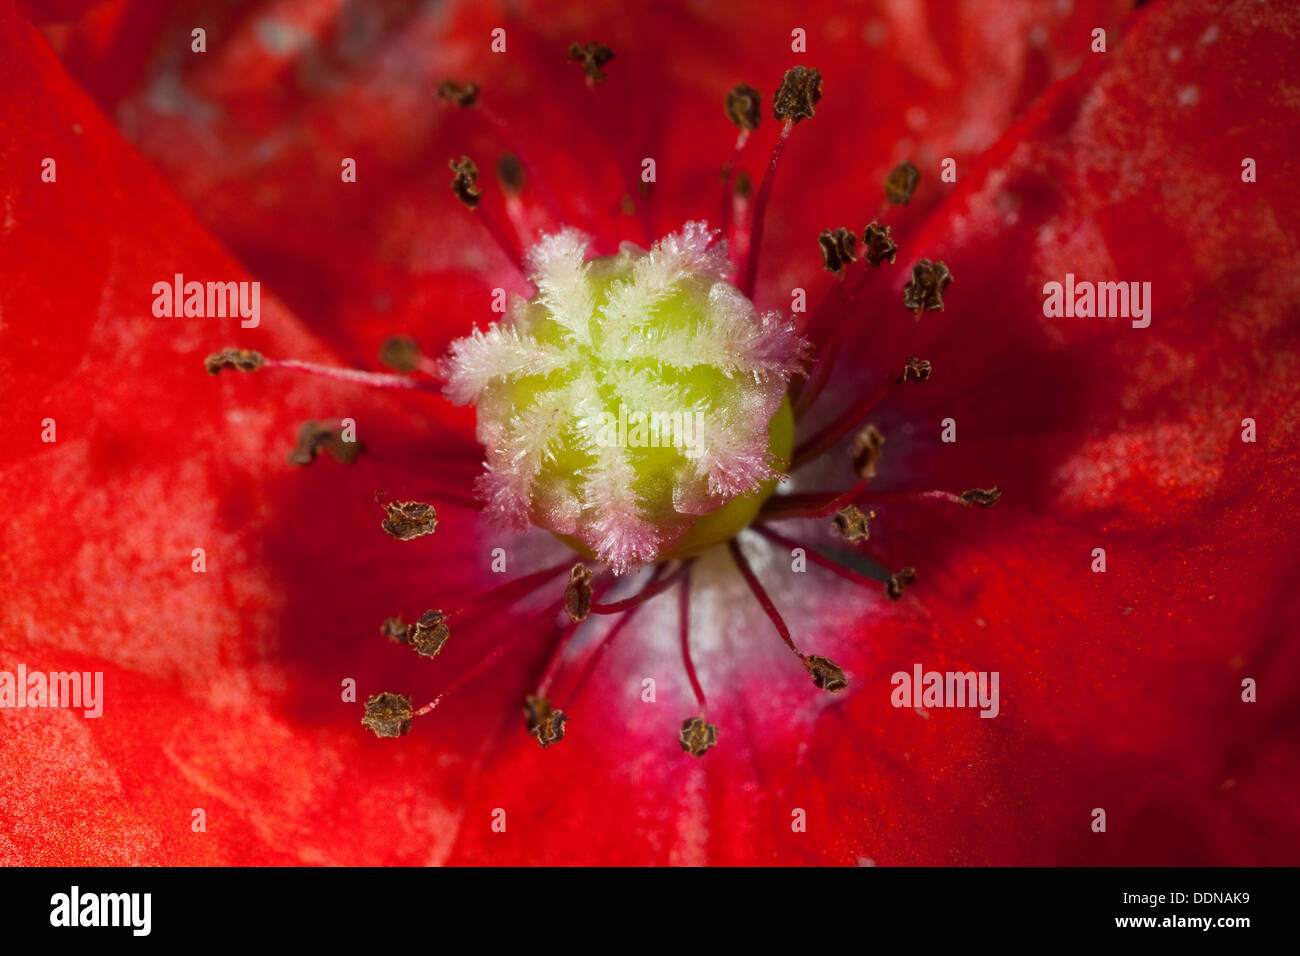 Poppy, Bloom, blossom, Mohn, Blüte mit Stempel, Fruchtknoten Staubbeuteln Narbe, und, Blütenaufbau Blütenökologie, Papaver, Banque D'Images